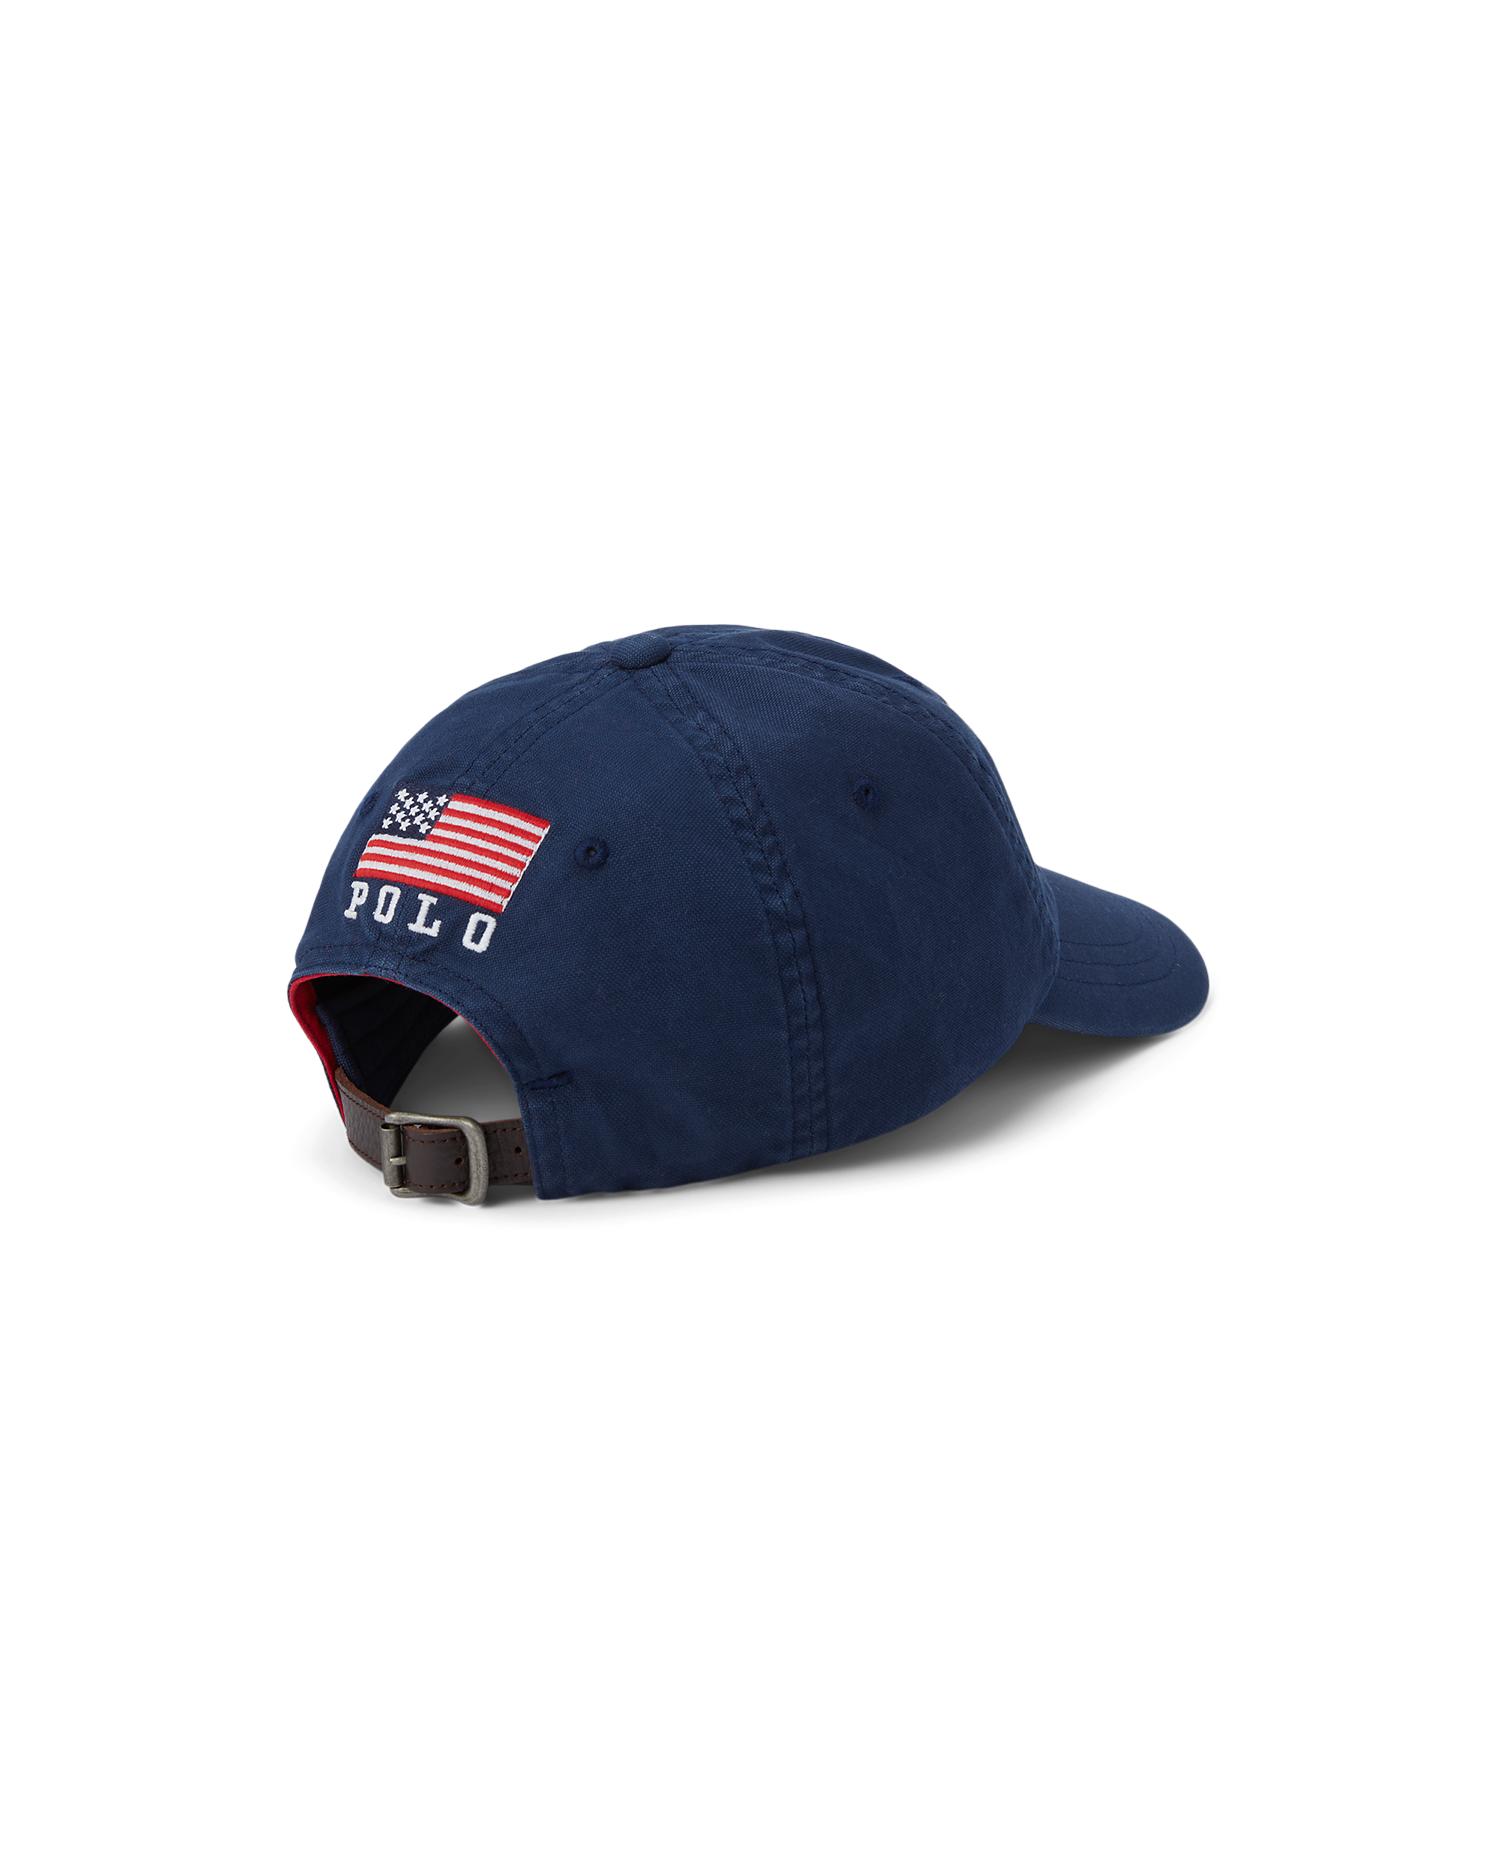 USA Longbill Cap - Navy